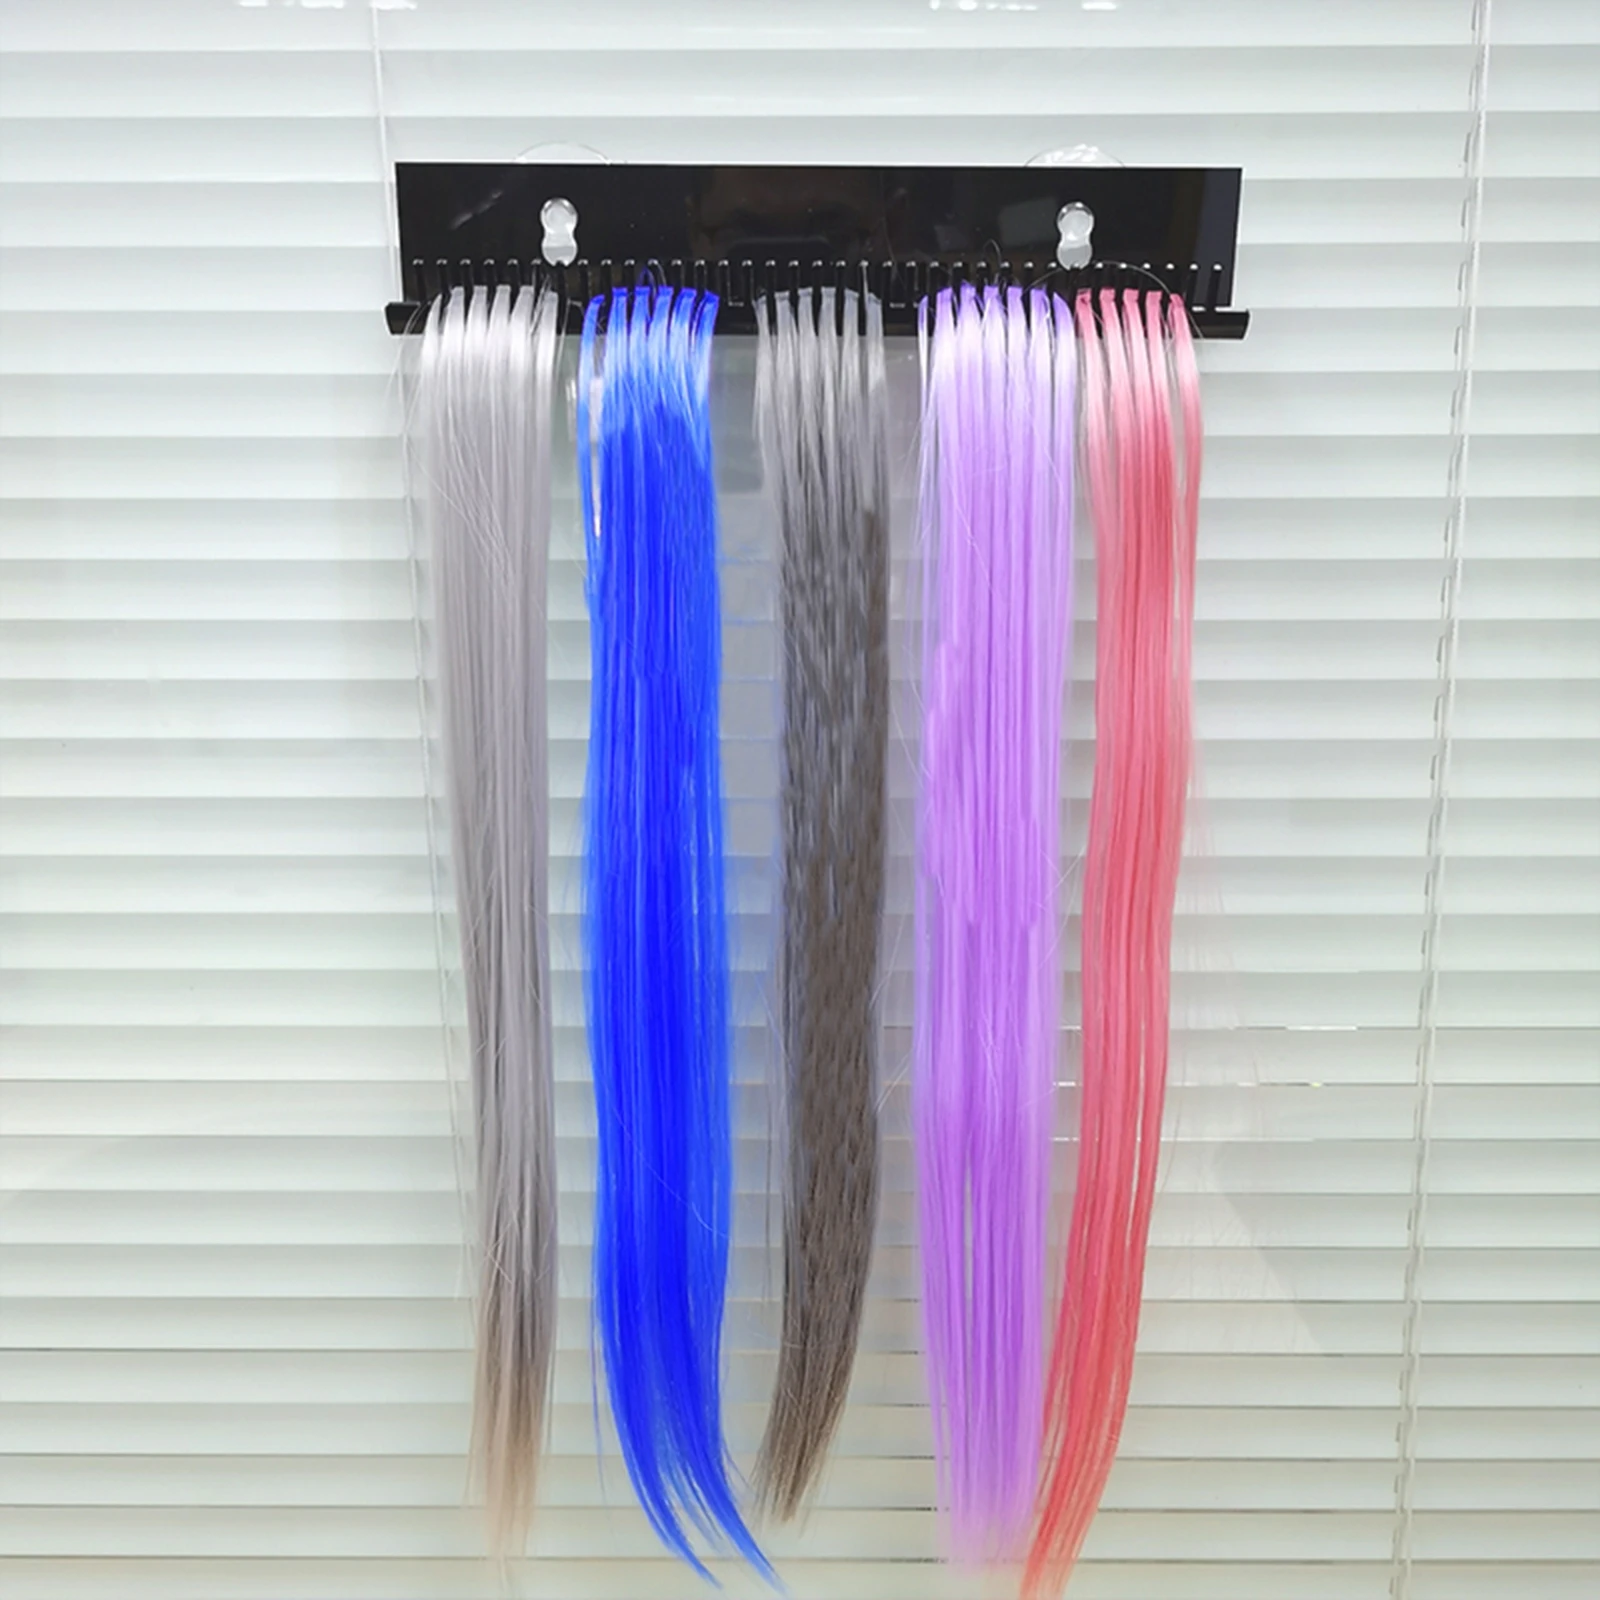 Hair Salon Spa Hair Extensions Display Storage Holder for Braiding - Black